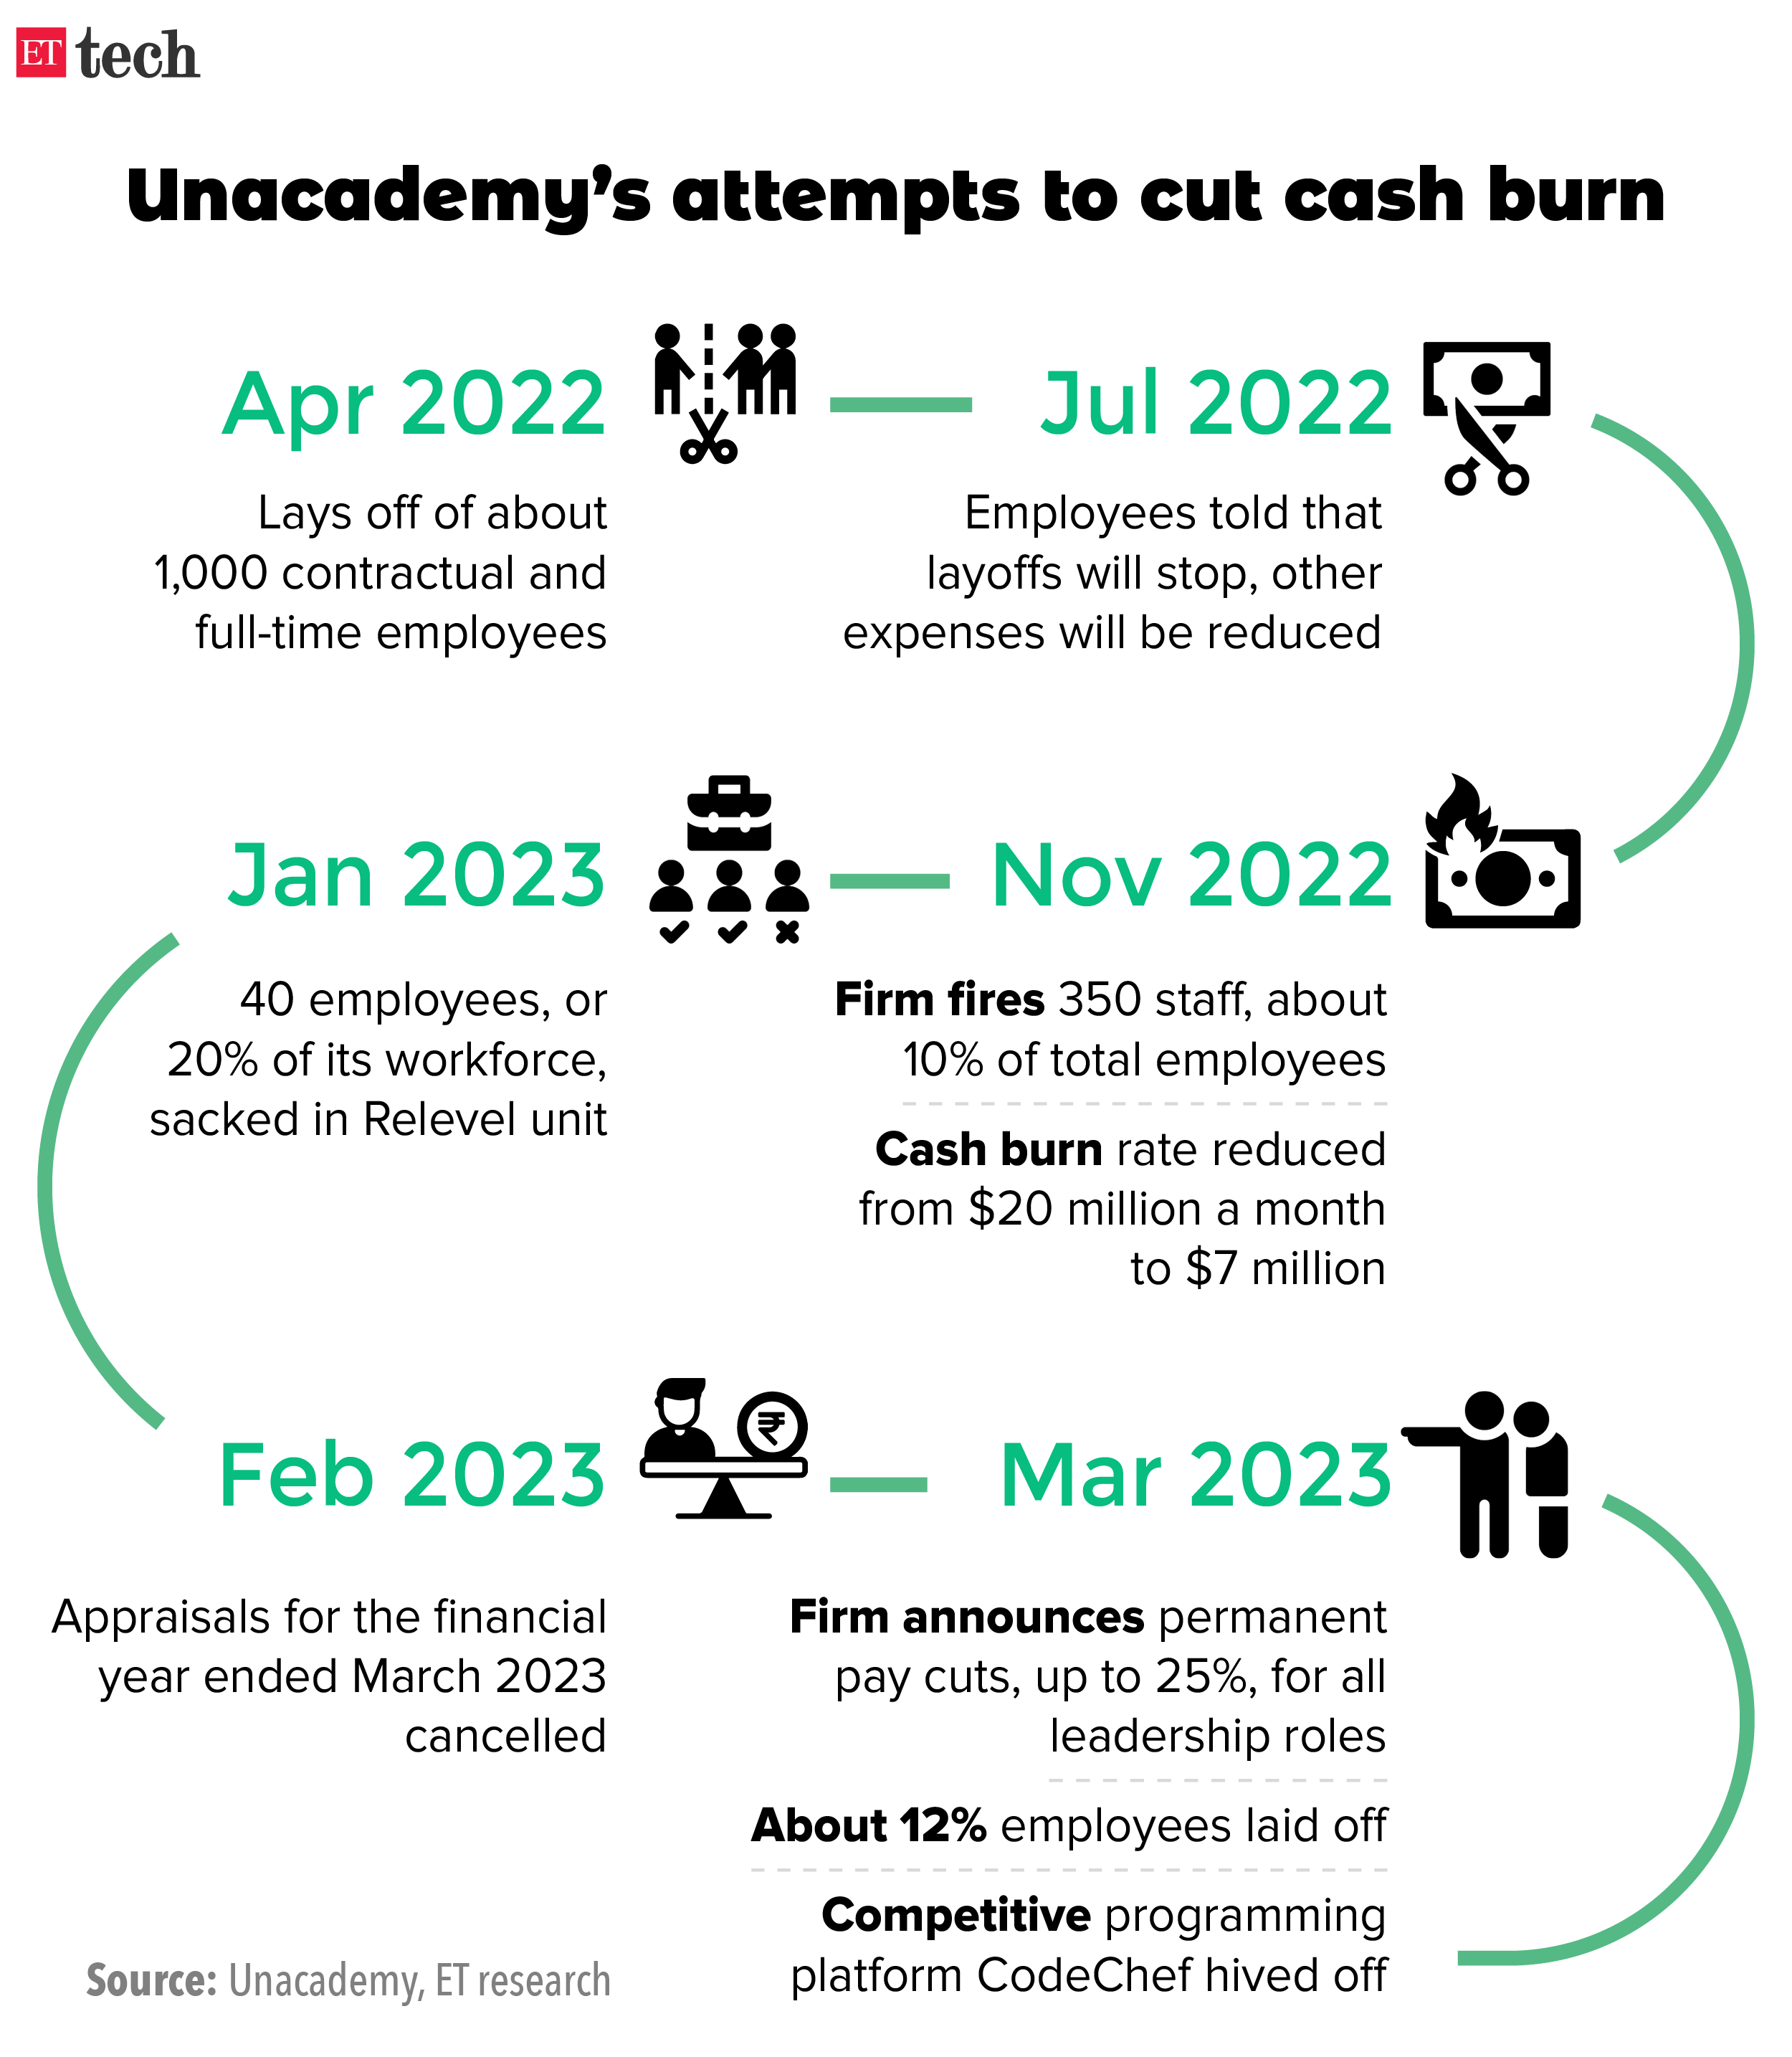 Unacademy attempts to cut cash burn-Timeline_Graphic_ETTECH